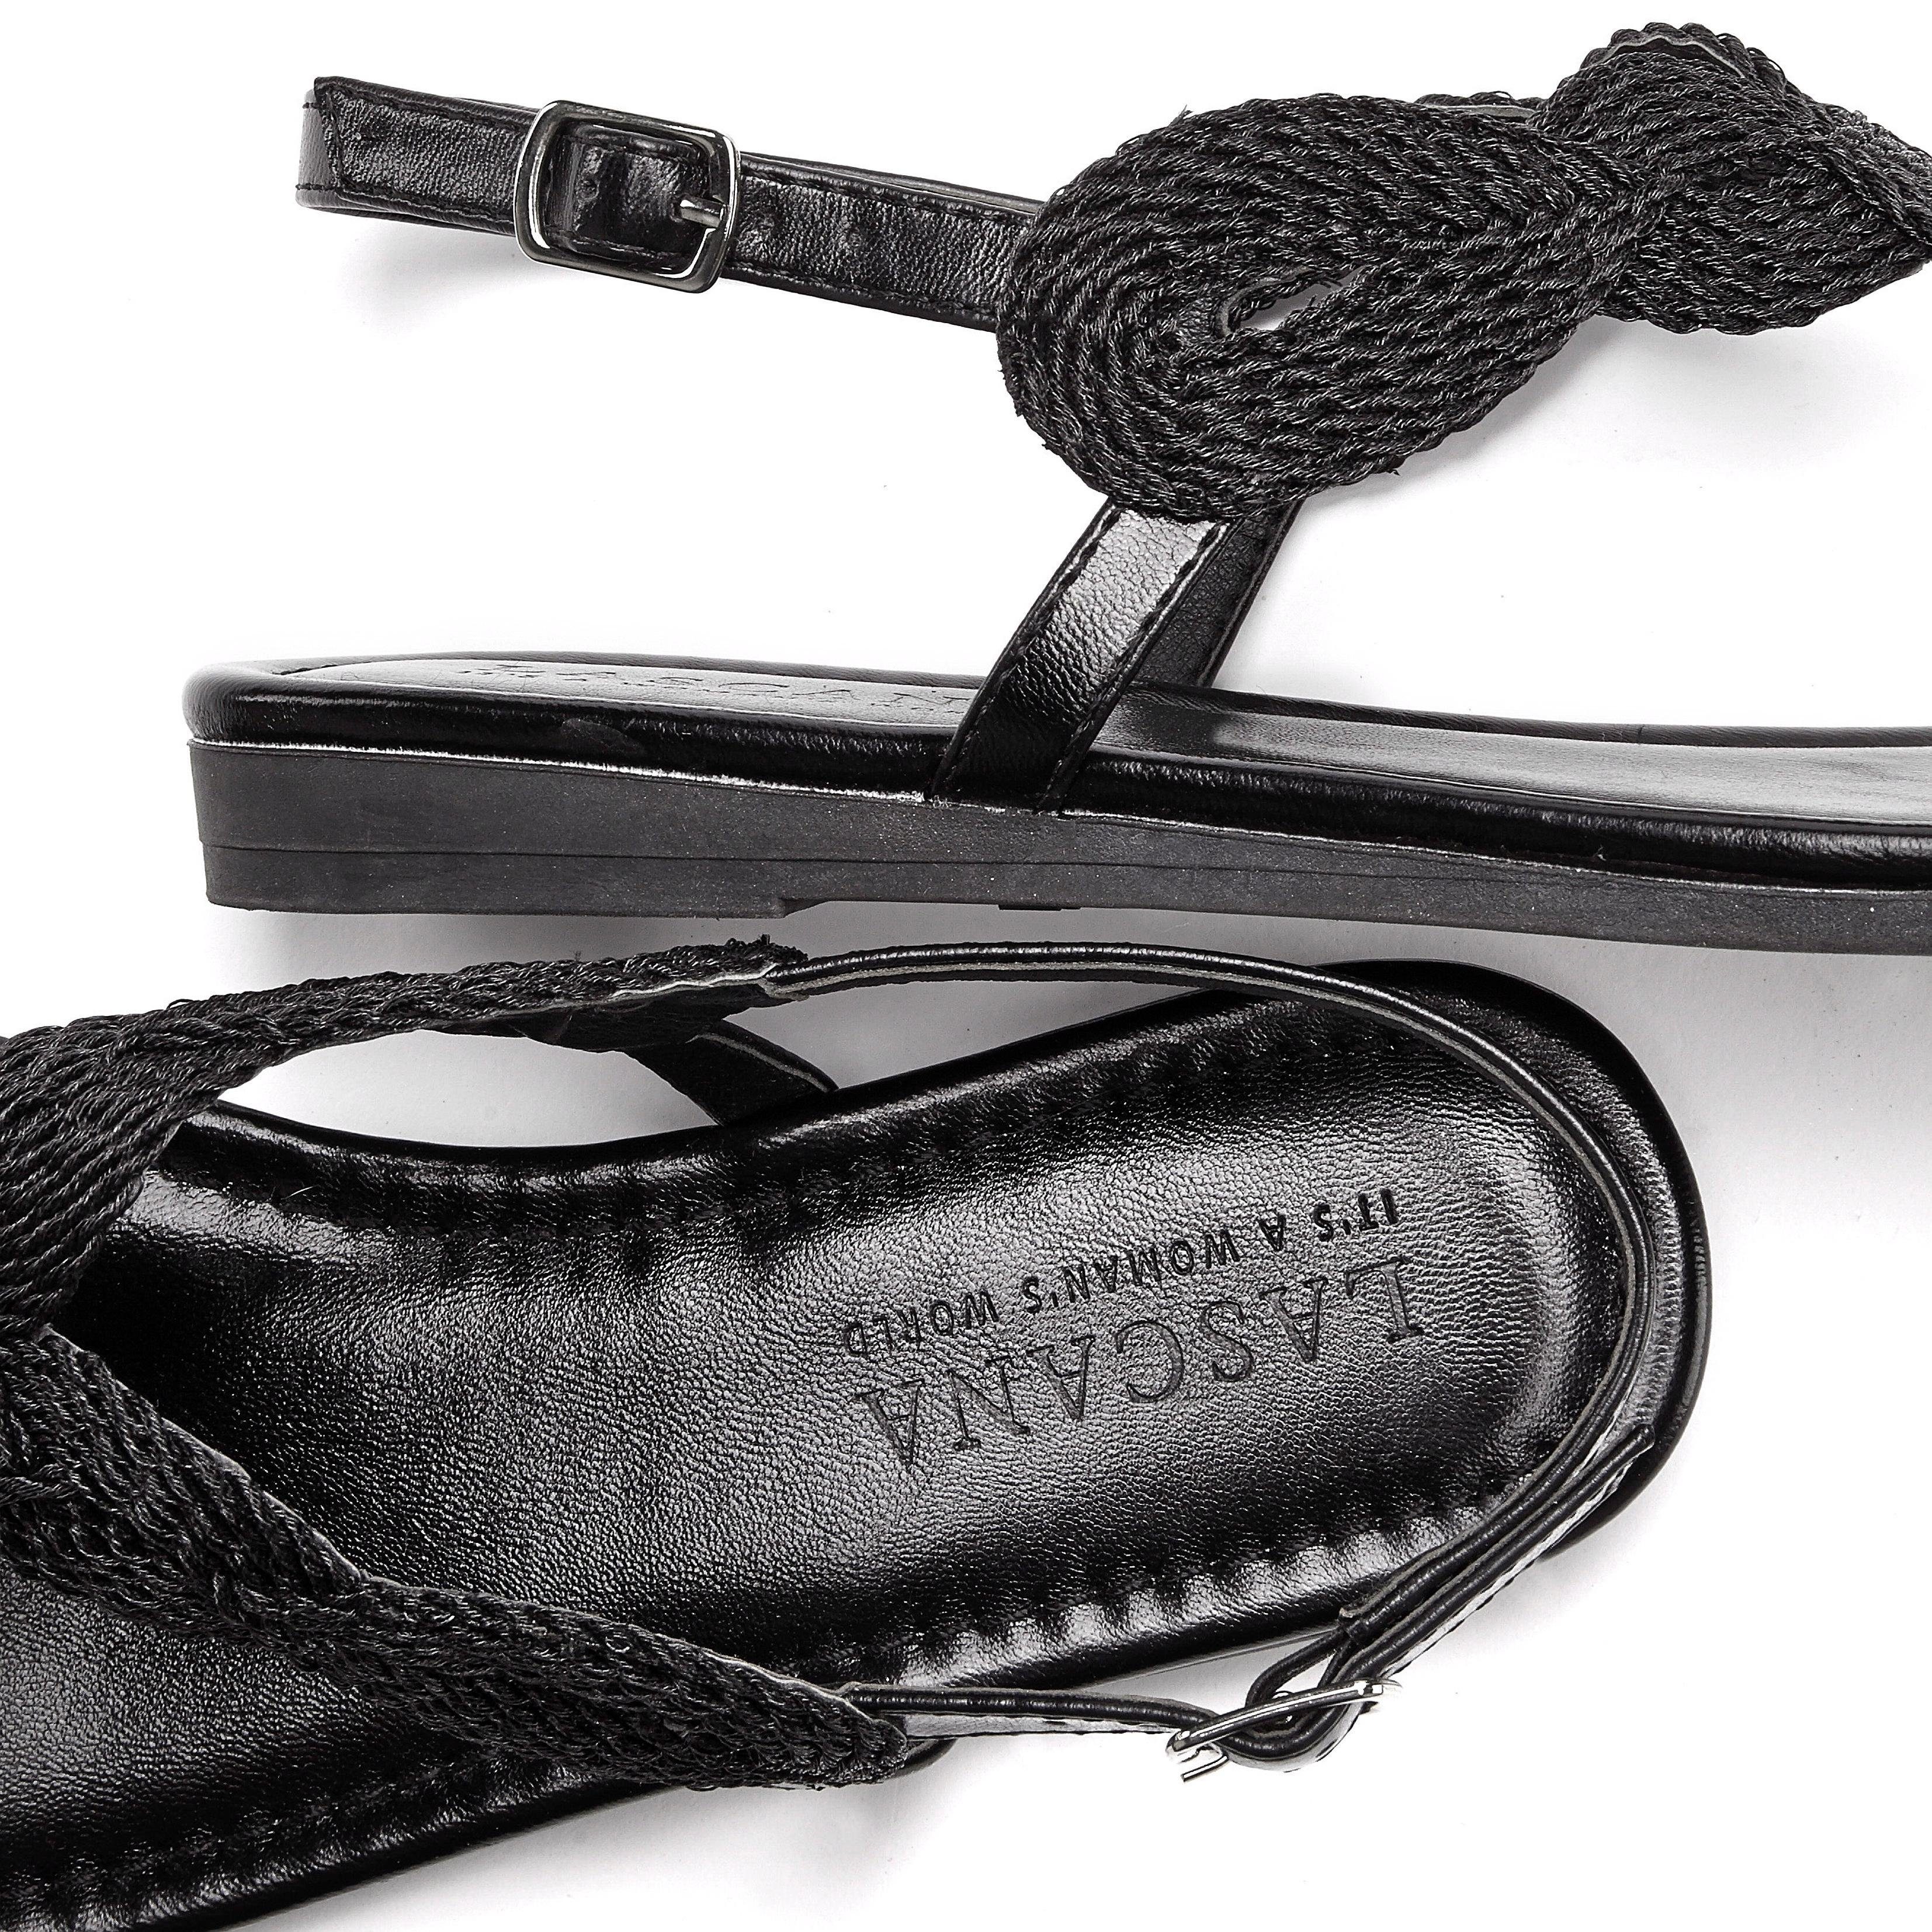 LASCANA VEGAN Zehentrenner Metallic-Look Pantolette im Sandale, schwarz